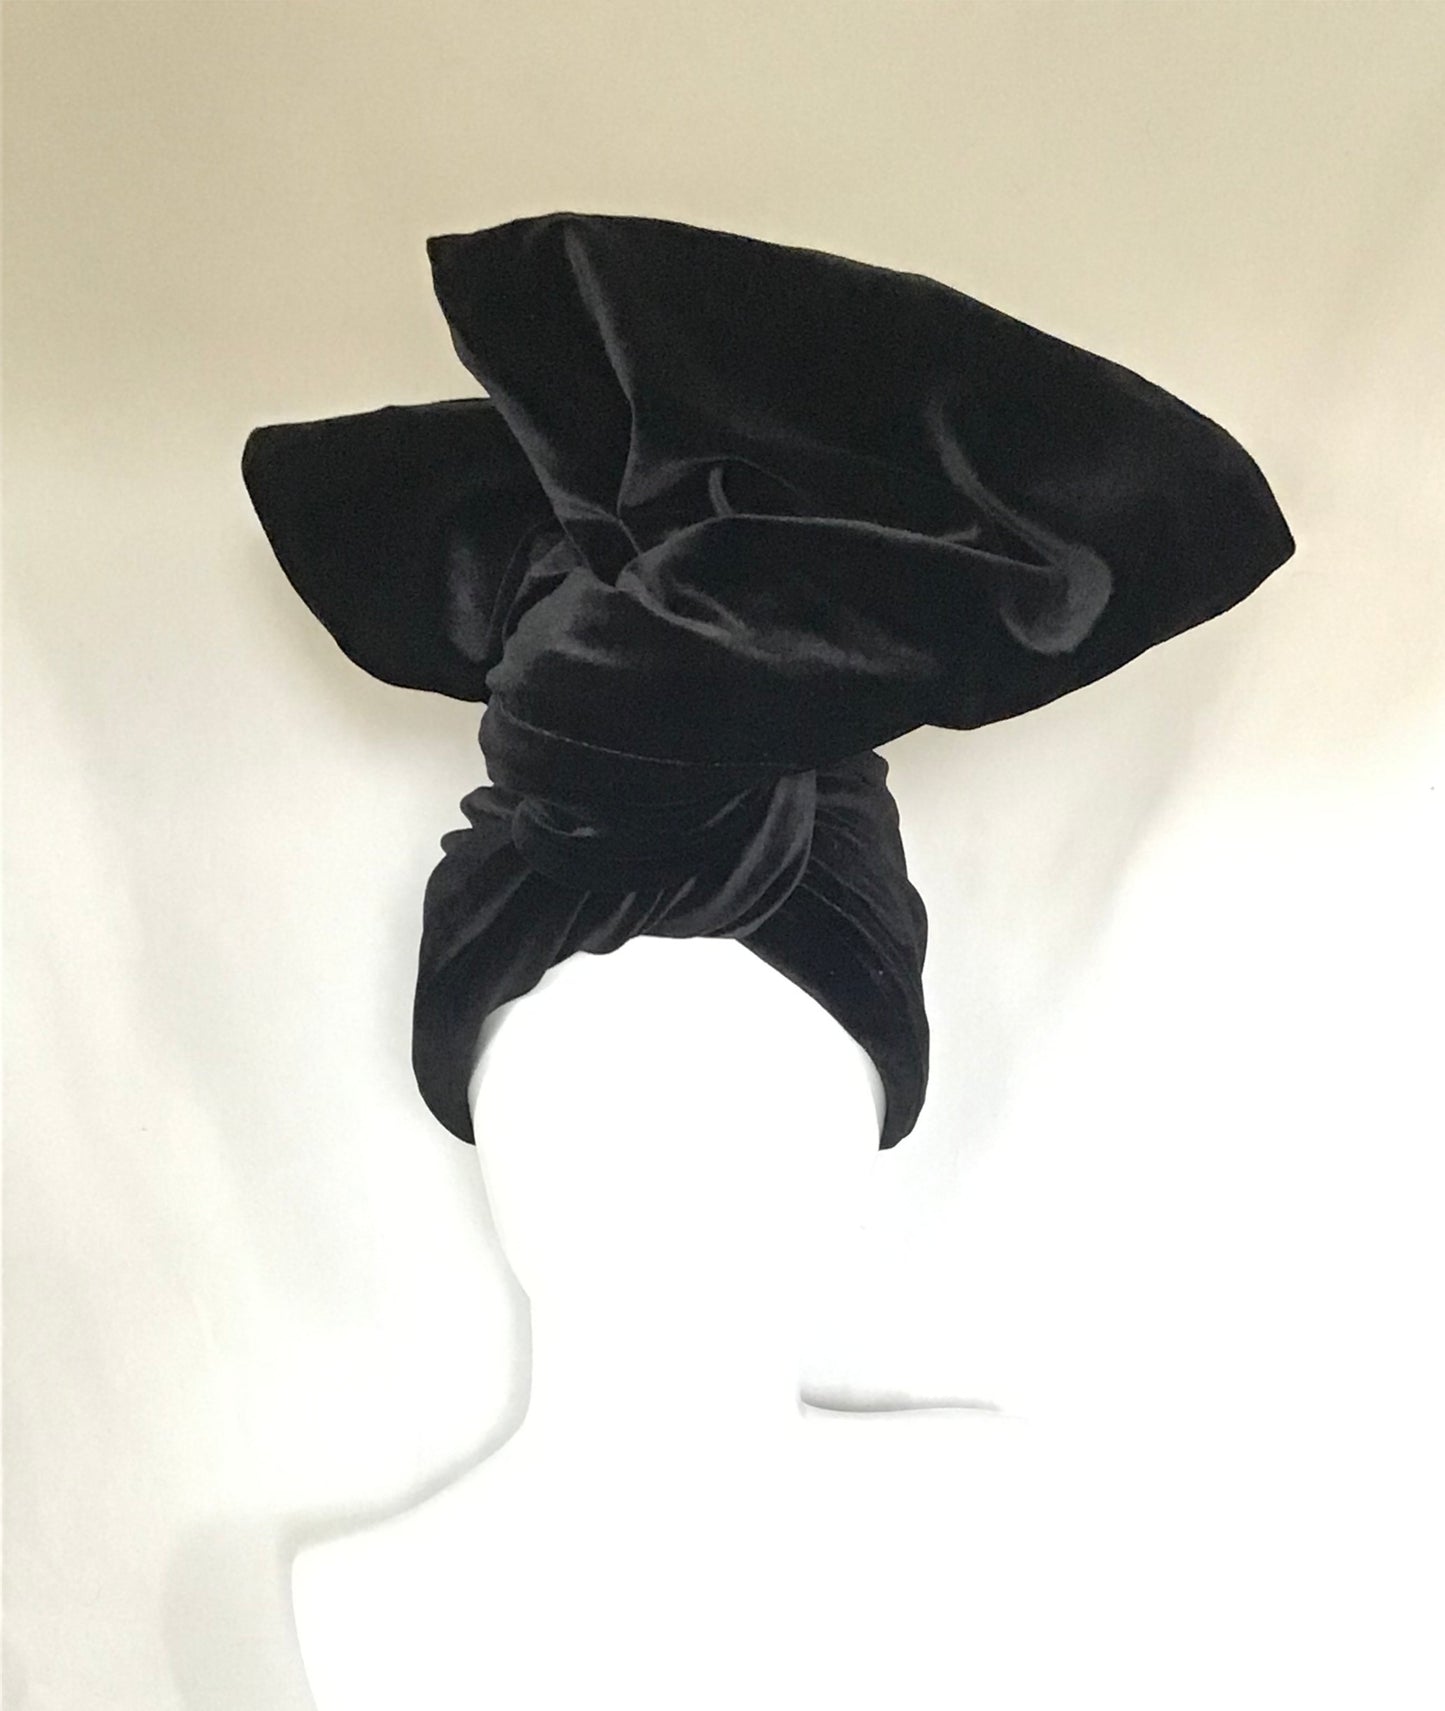 Velvet Twisturban in black